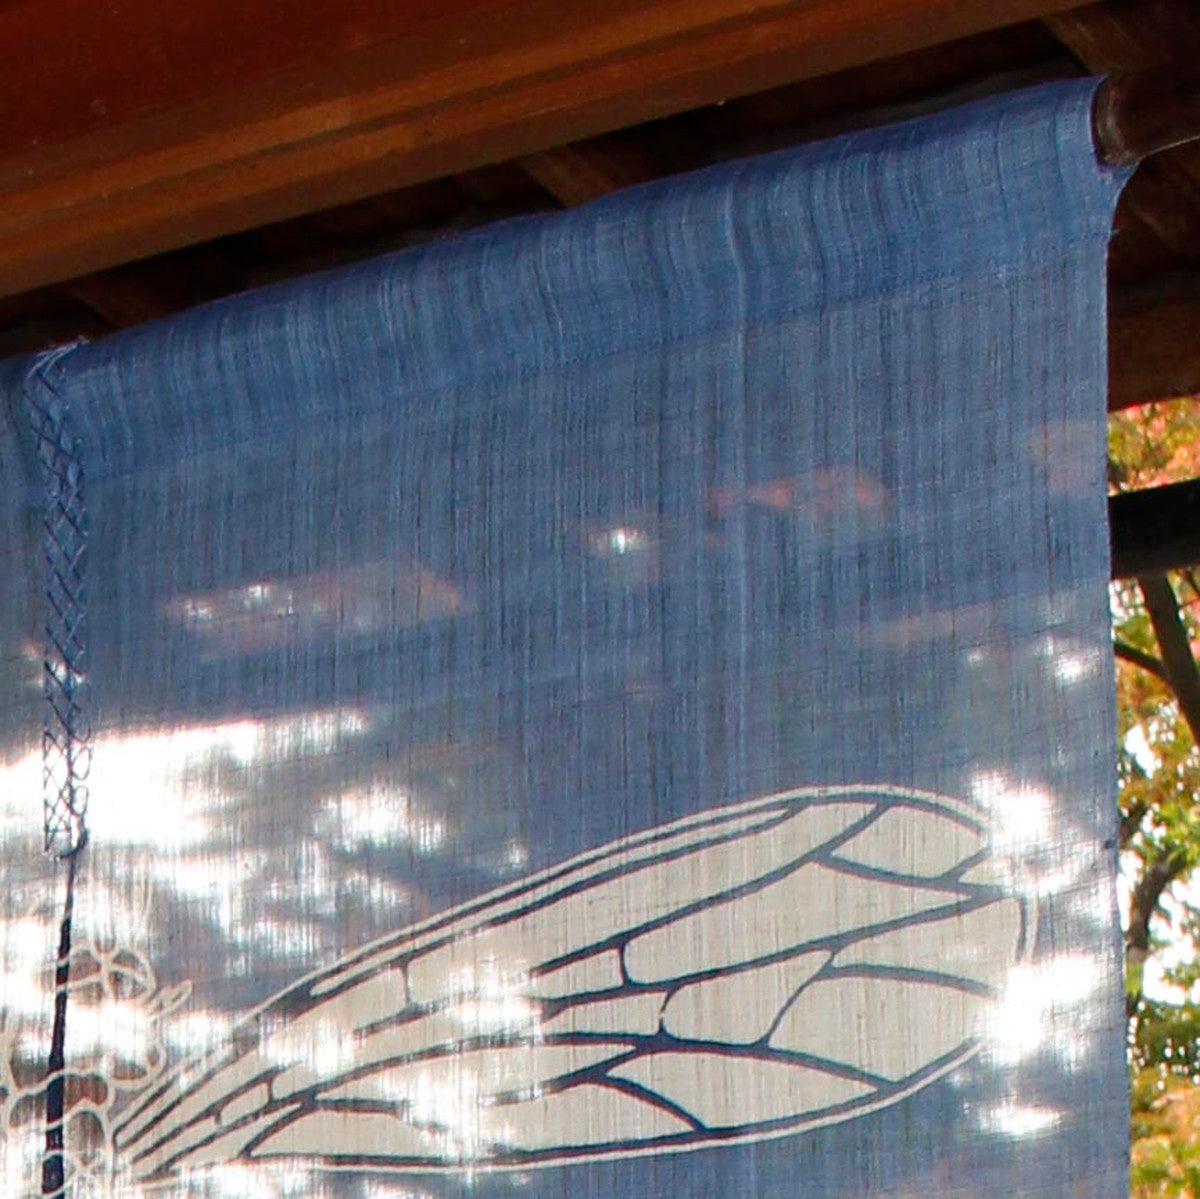 Japanese Curtain (Noren) / Ramie / Dragonfly /  Blue  / W90xH120cm